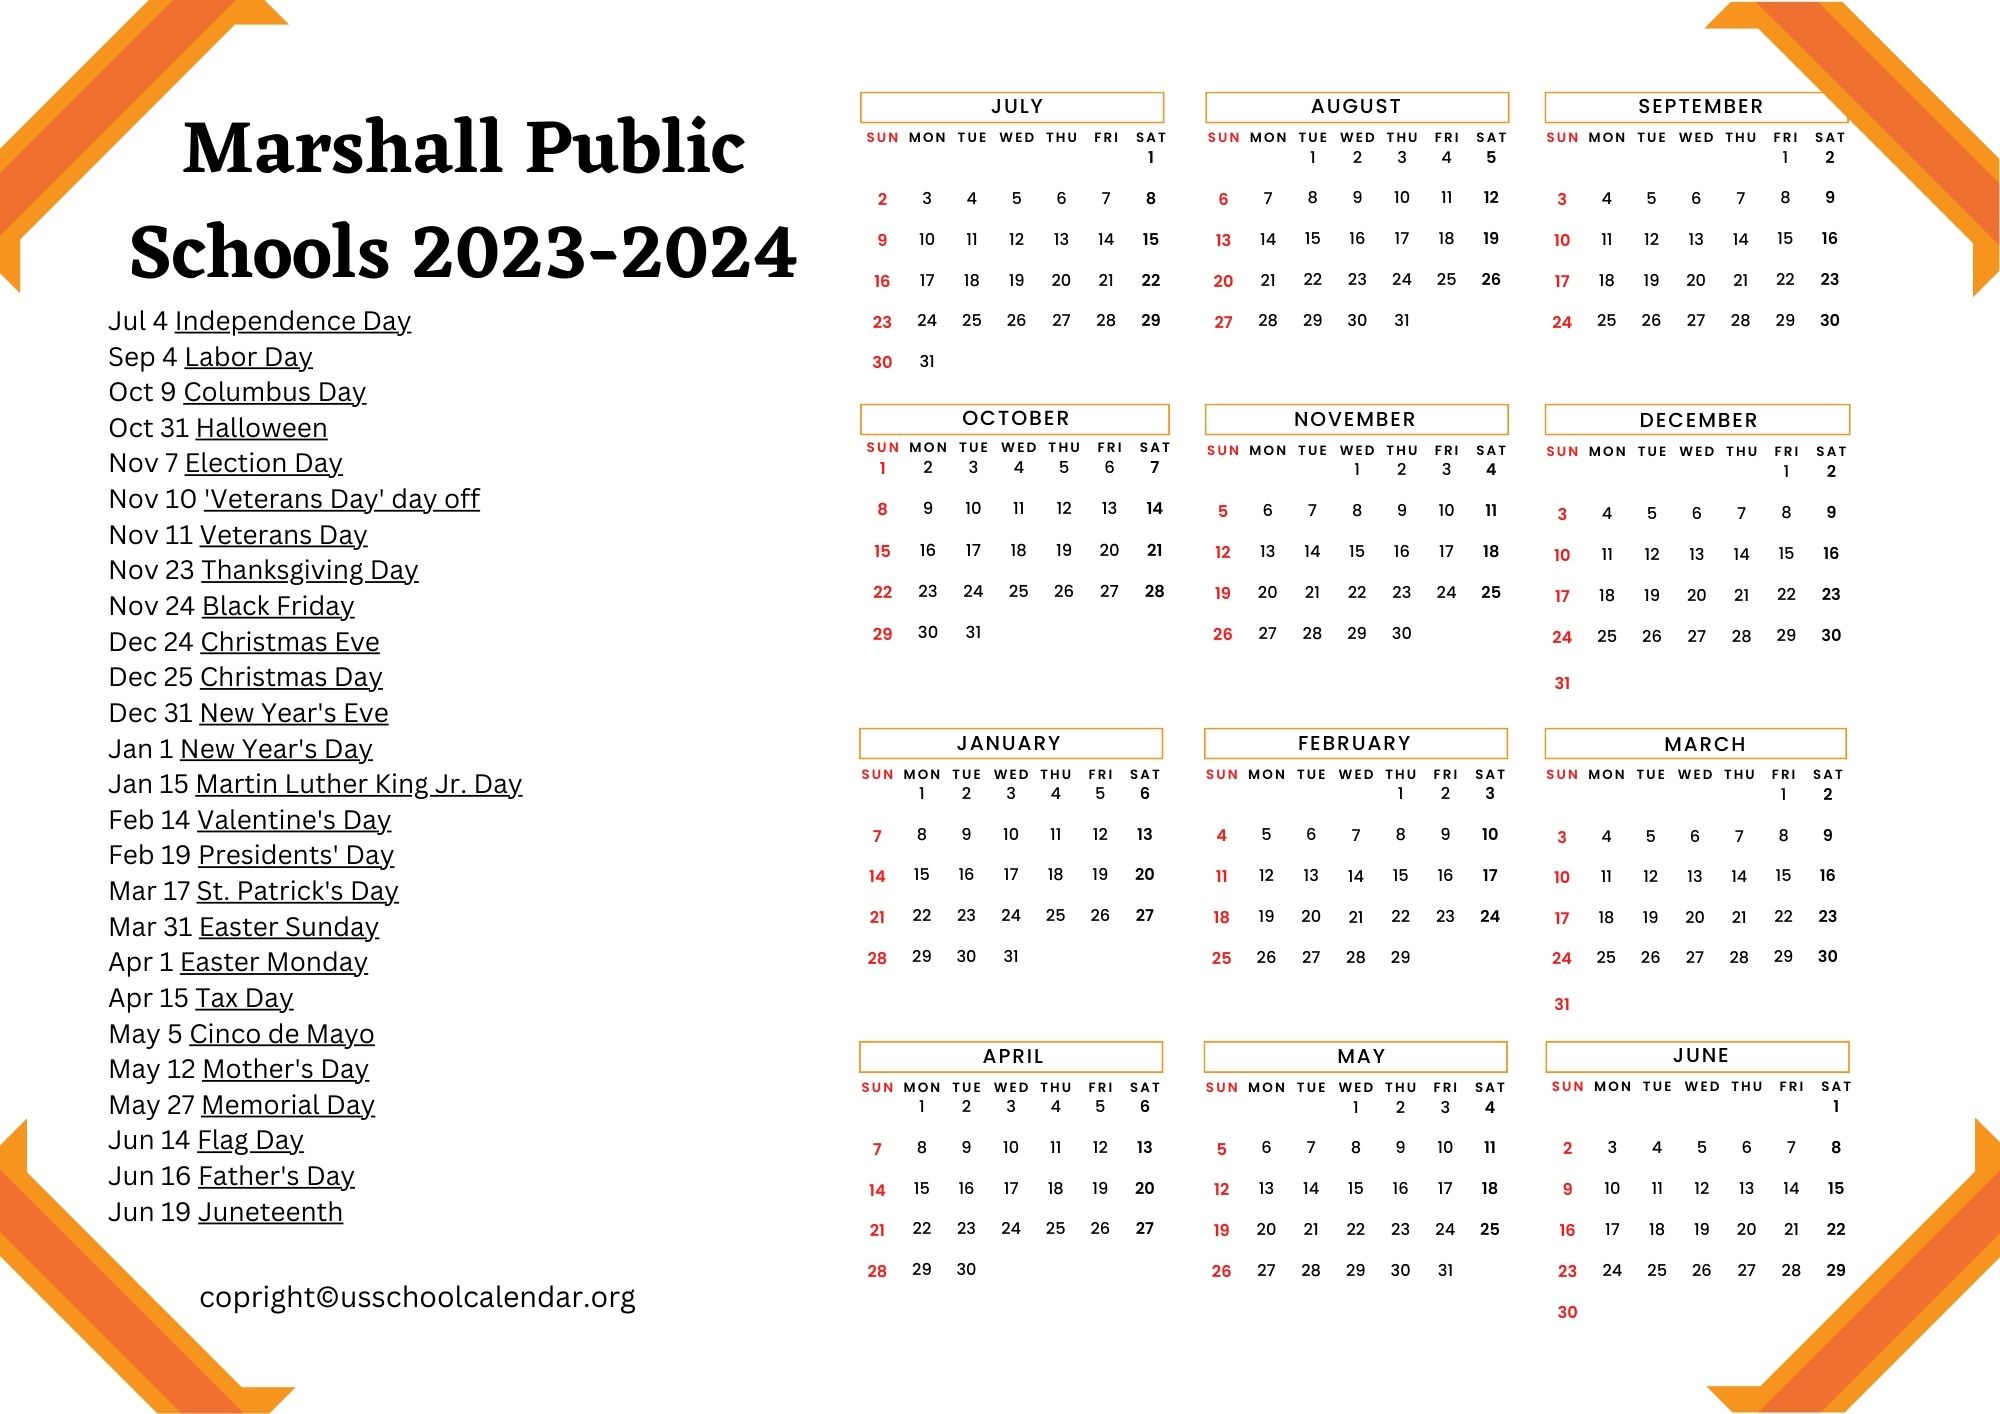 Marshall Public Schools Calendar with Holidays 20232024